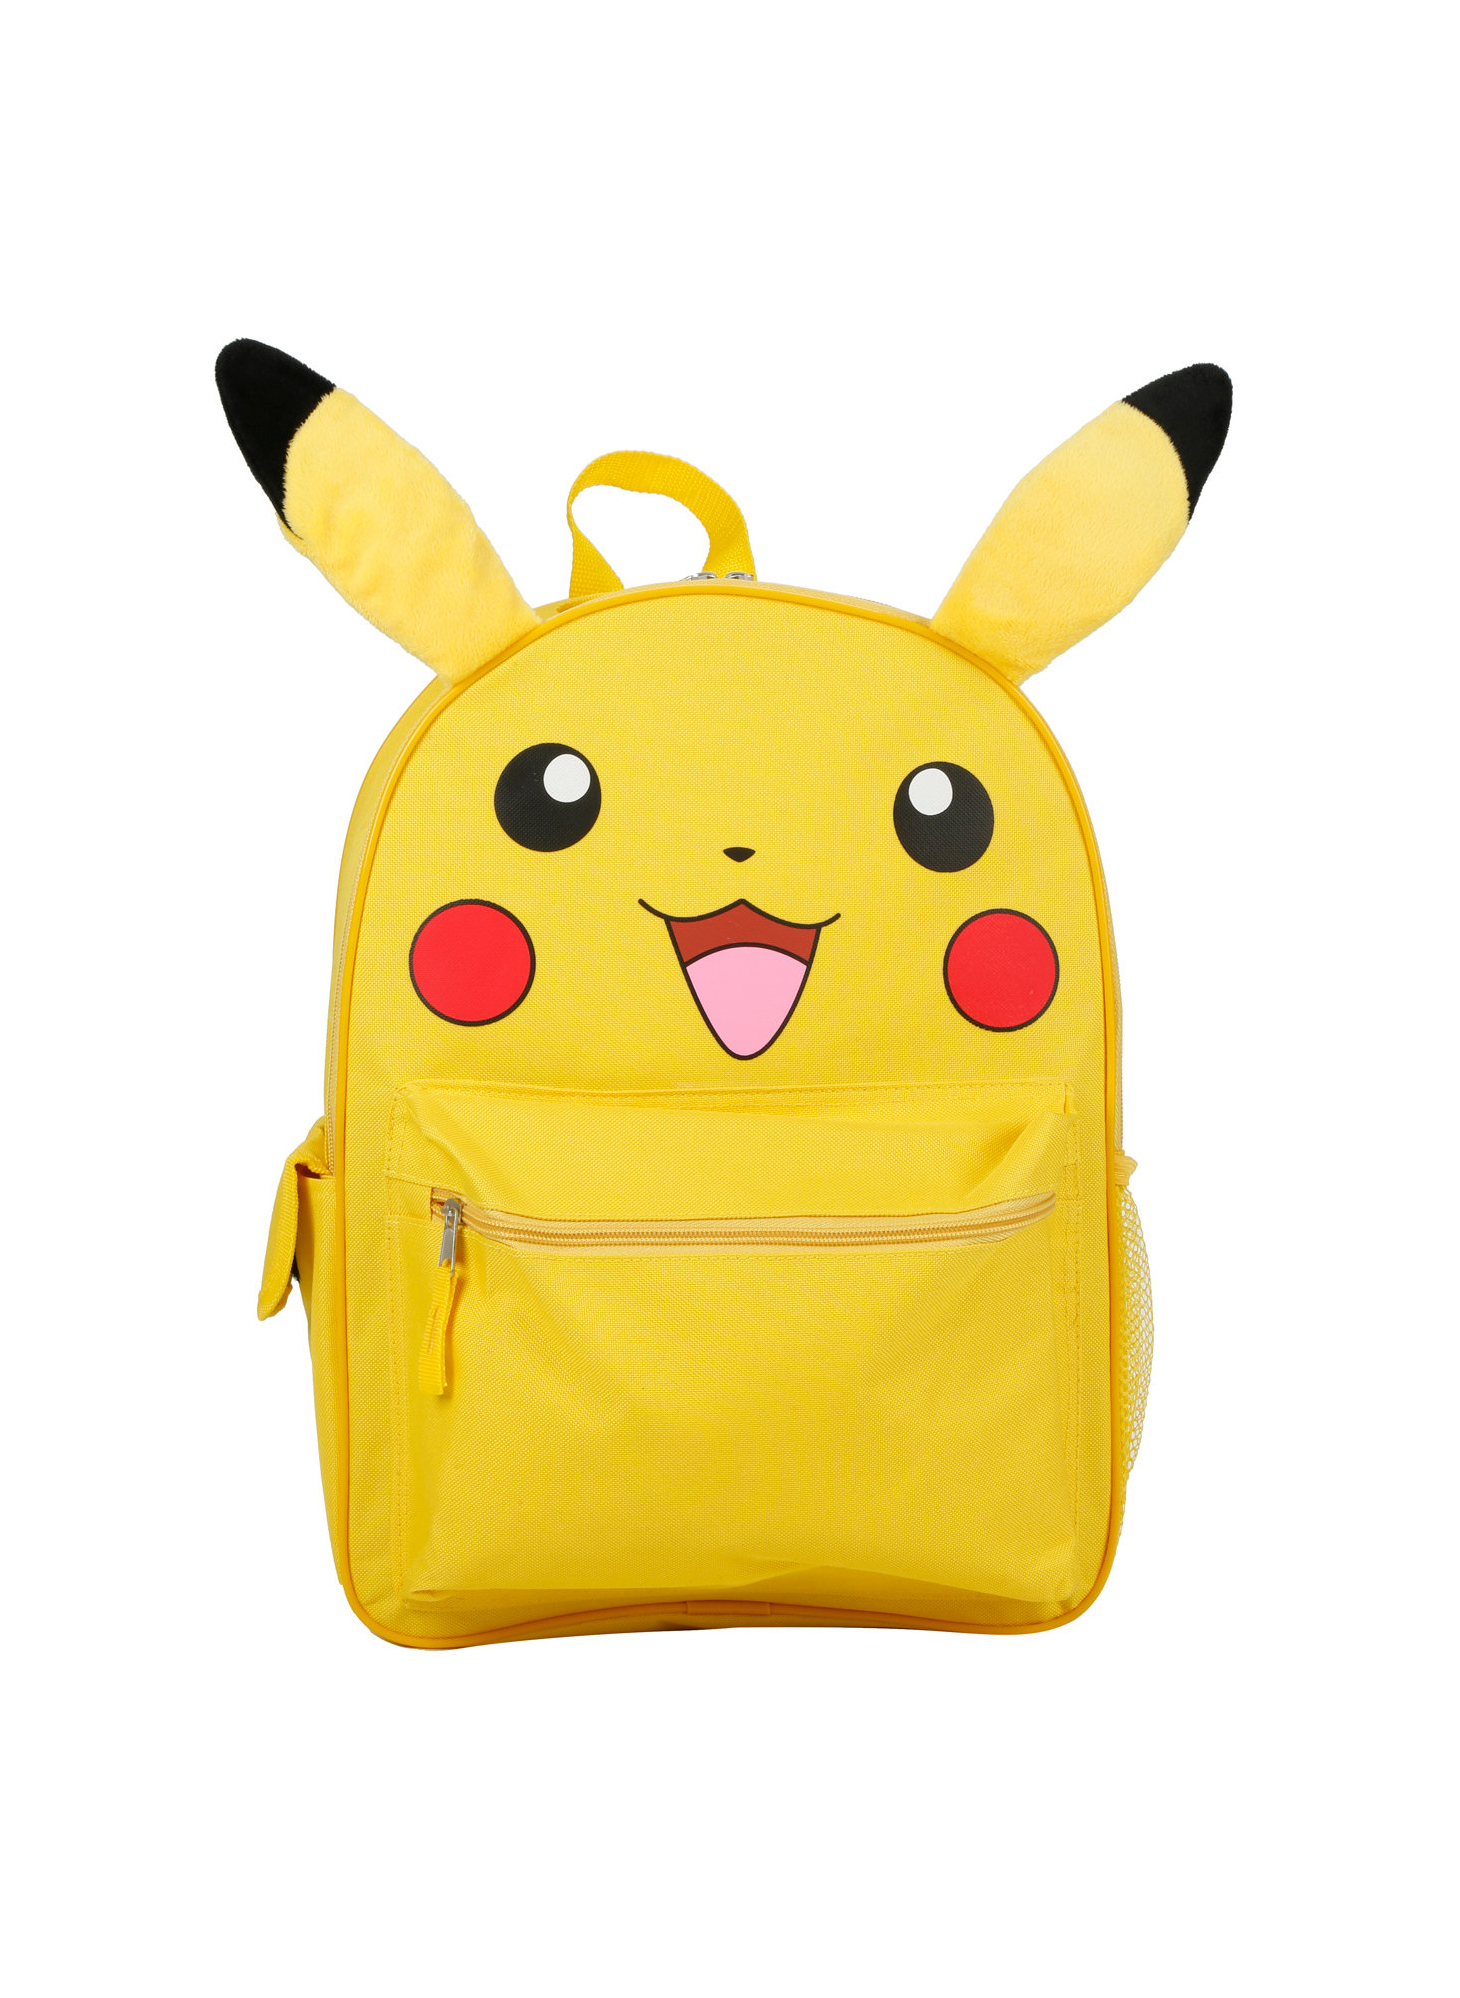 omhelzing Slaapkamer Gewoon Pikachu Pokémon rugtas klein kopen? €21,95 - FeestinjeBeest.nl